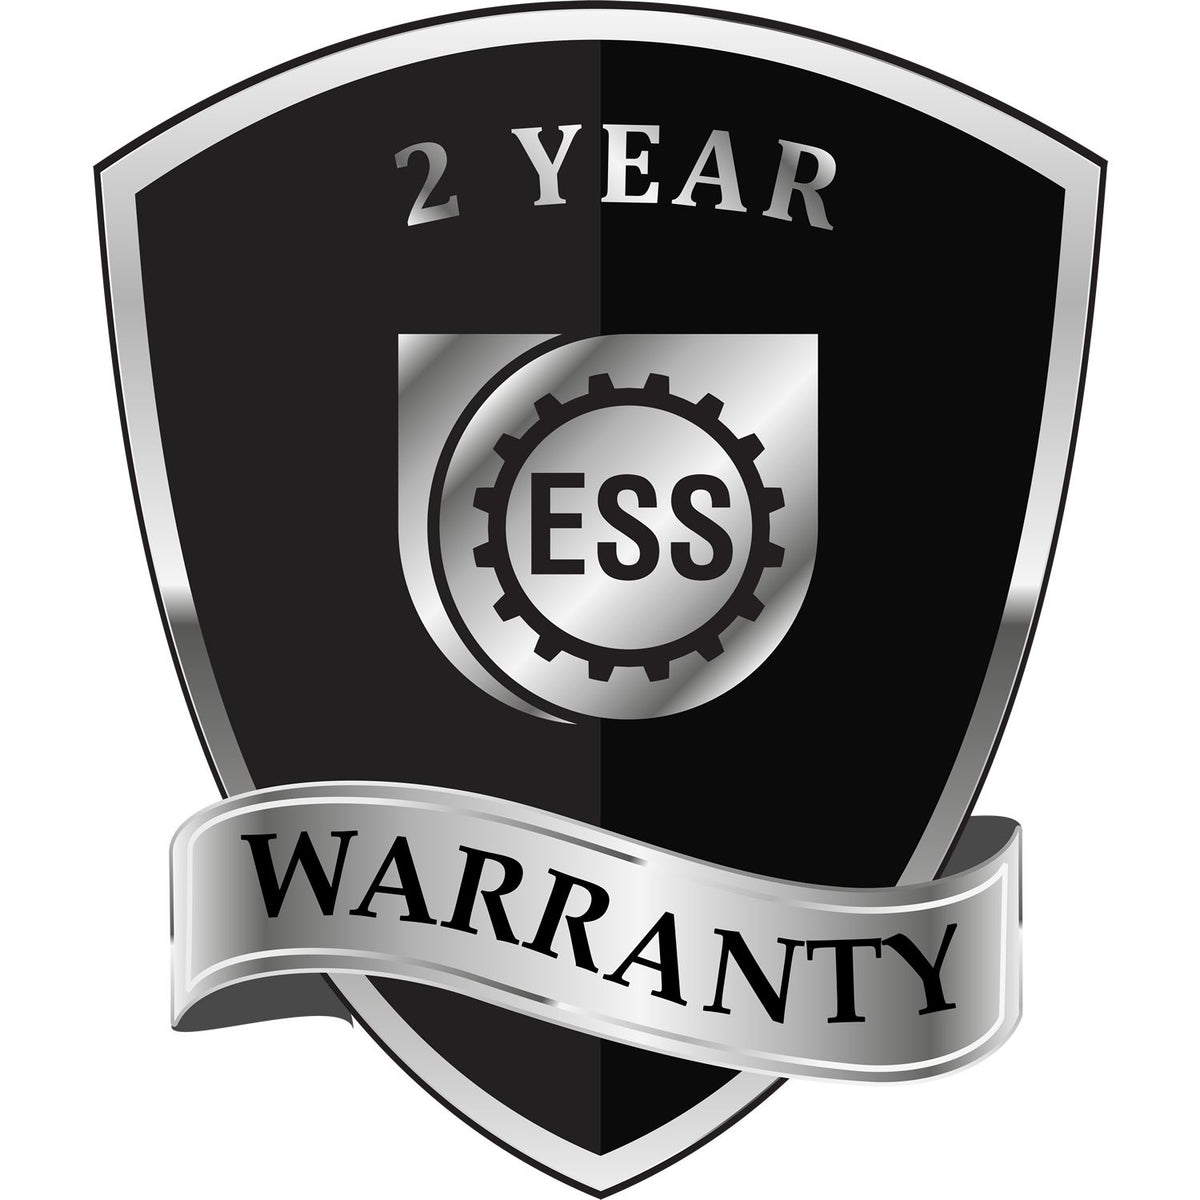 A black and silver badge or emblem showing warranty information for the Gift Washington Land Surveyor Seal